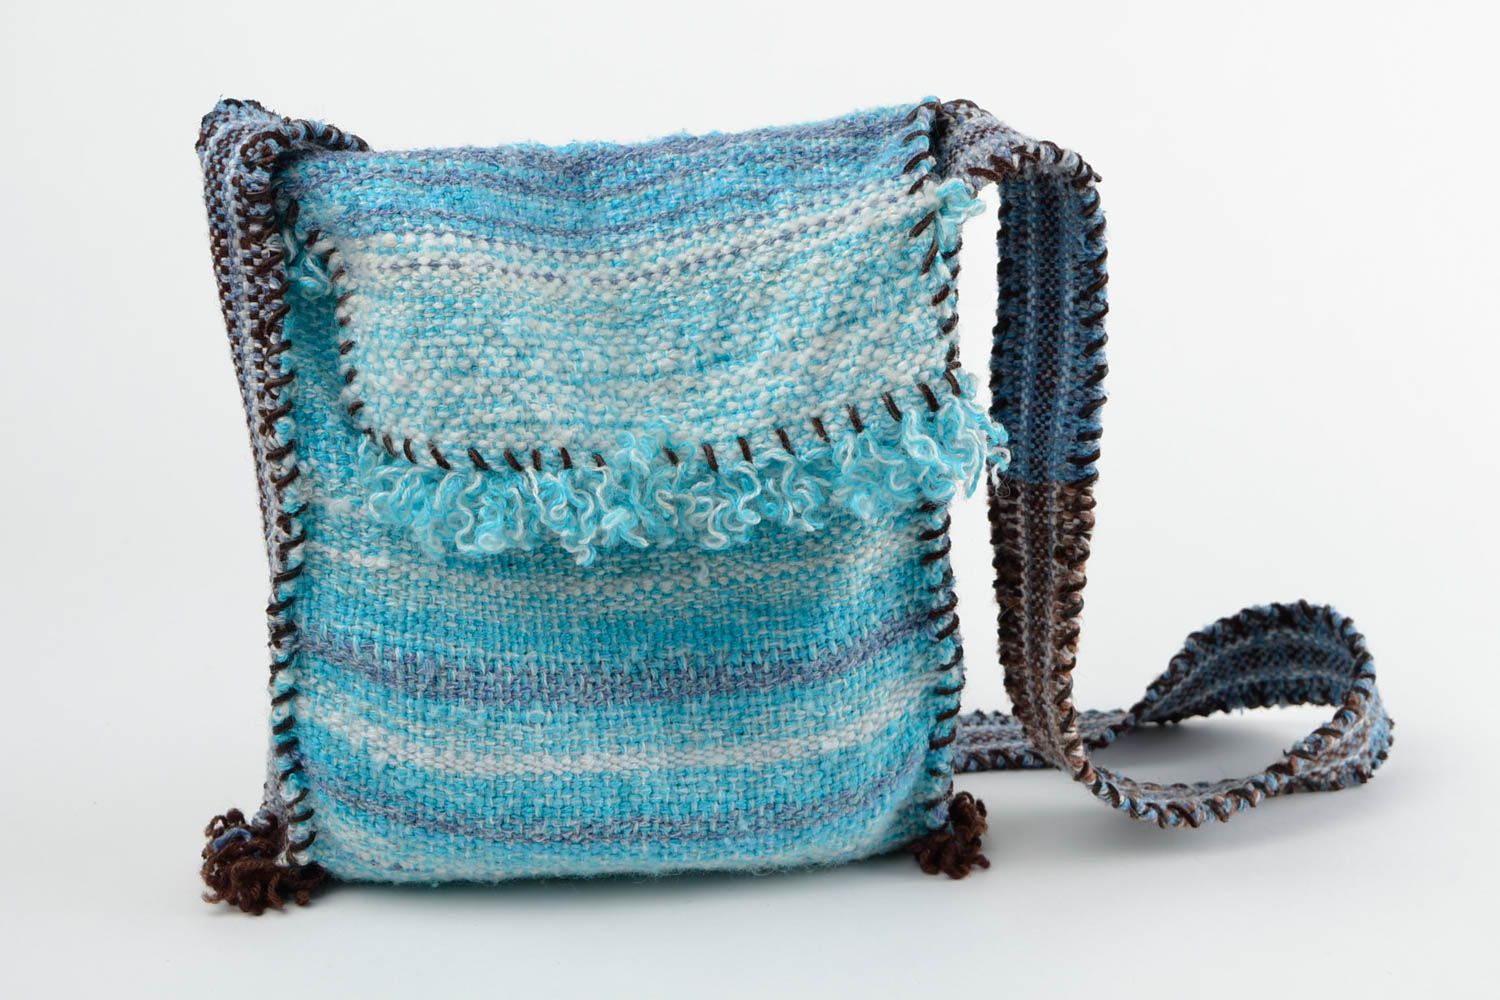 Handmade bag designer bag unusual bag stylish bag gift ideas bag for women photo 1